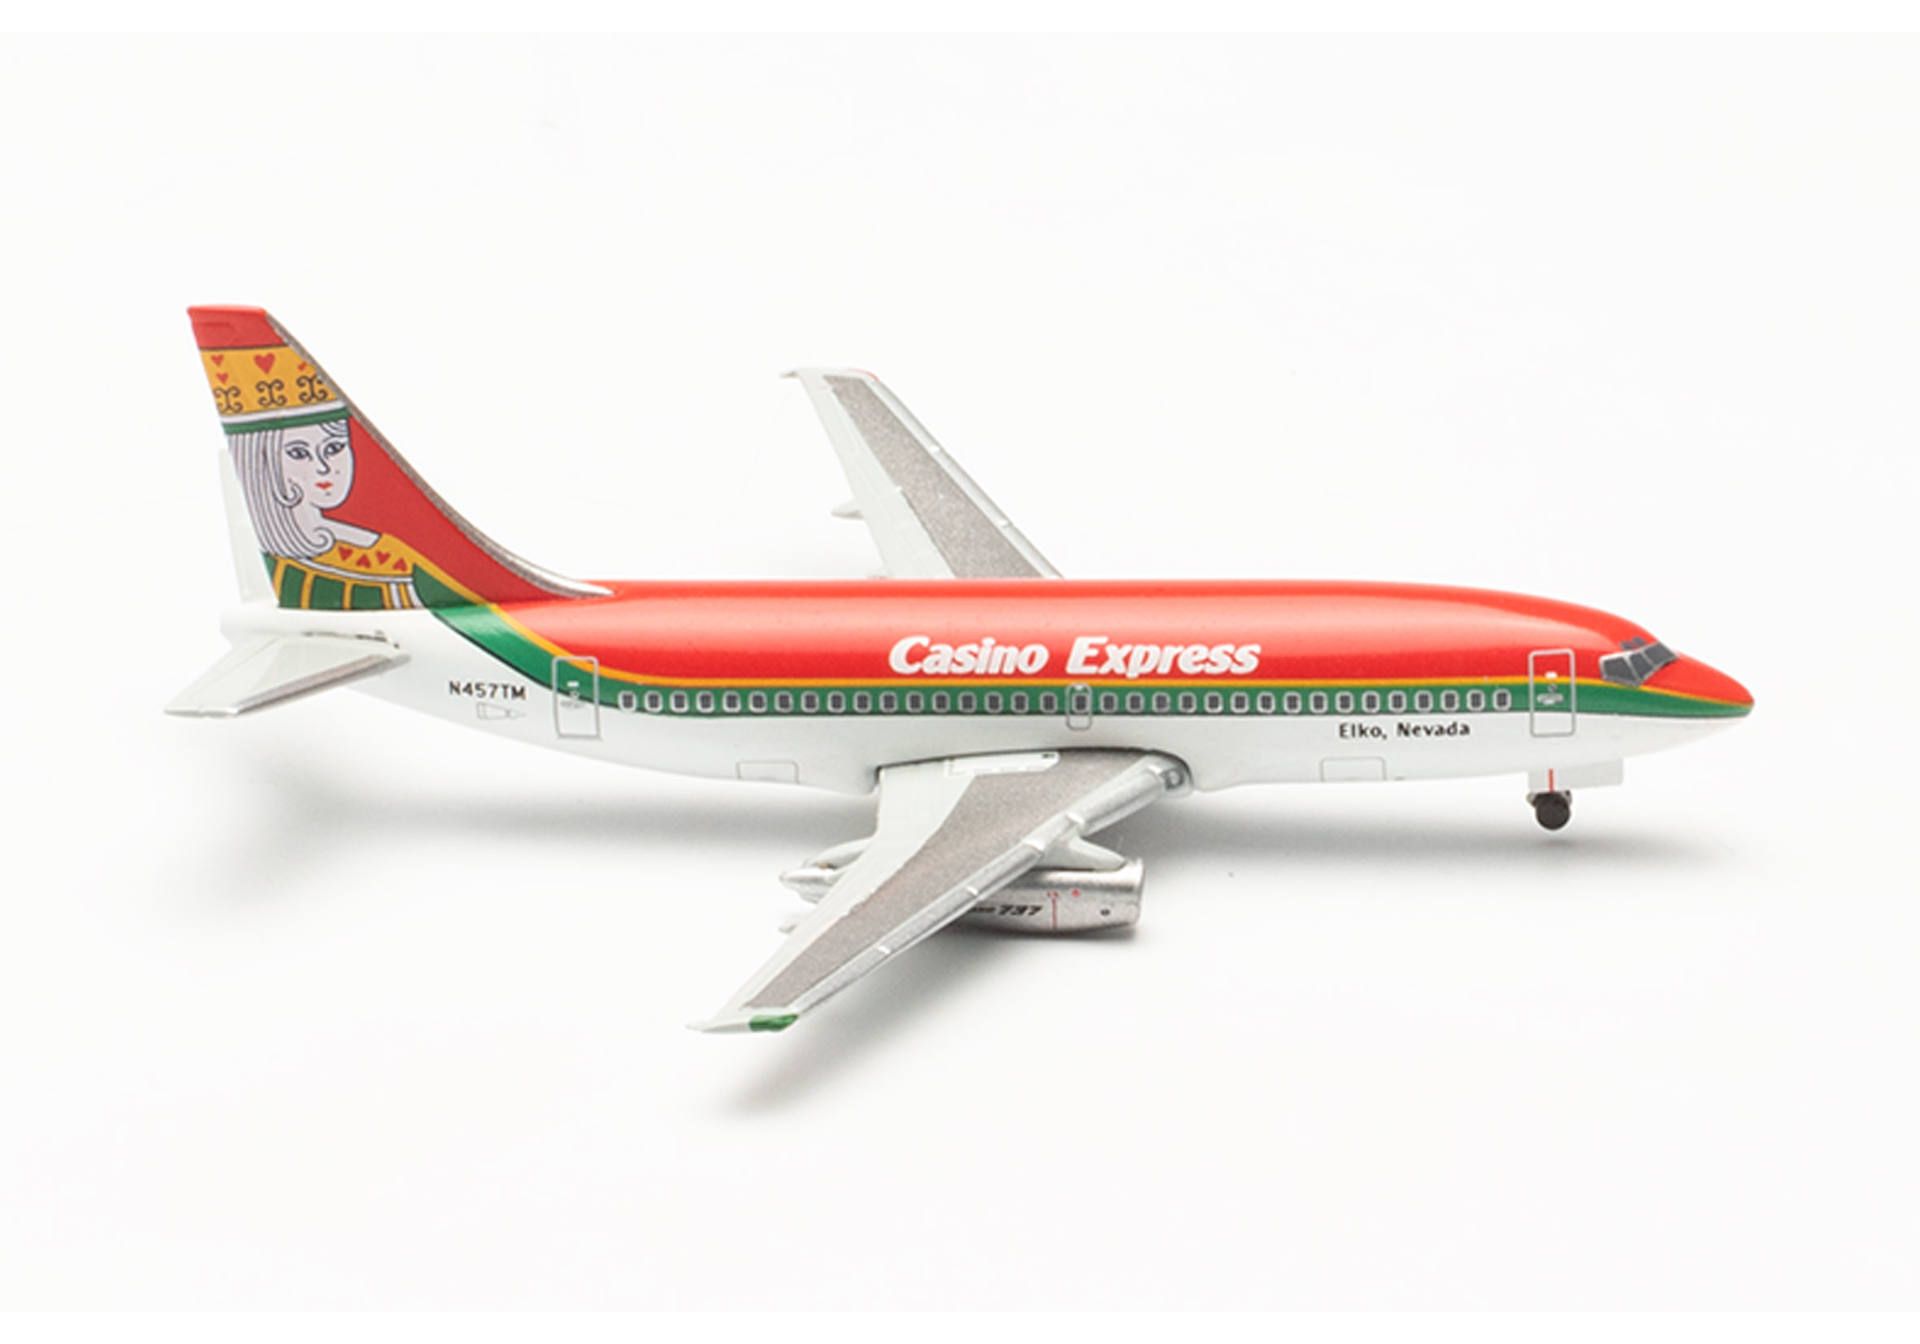 Casino Express Boeing 737-200 "Queen of Hearts" Reg.:  N457TM